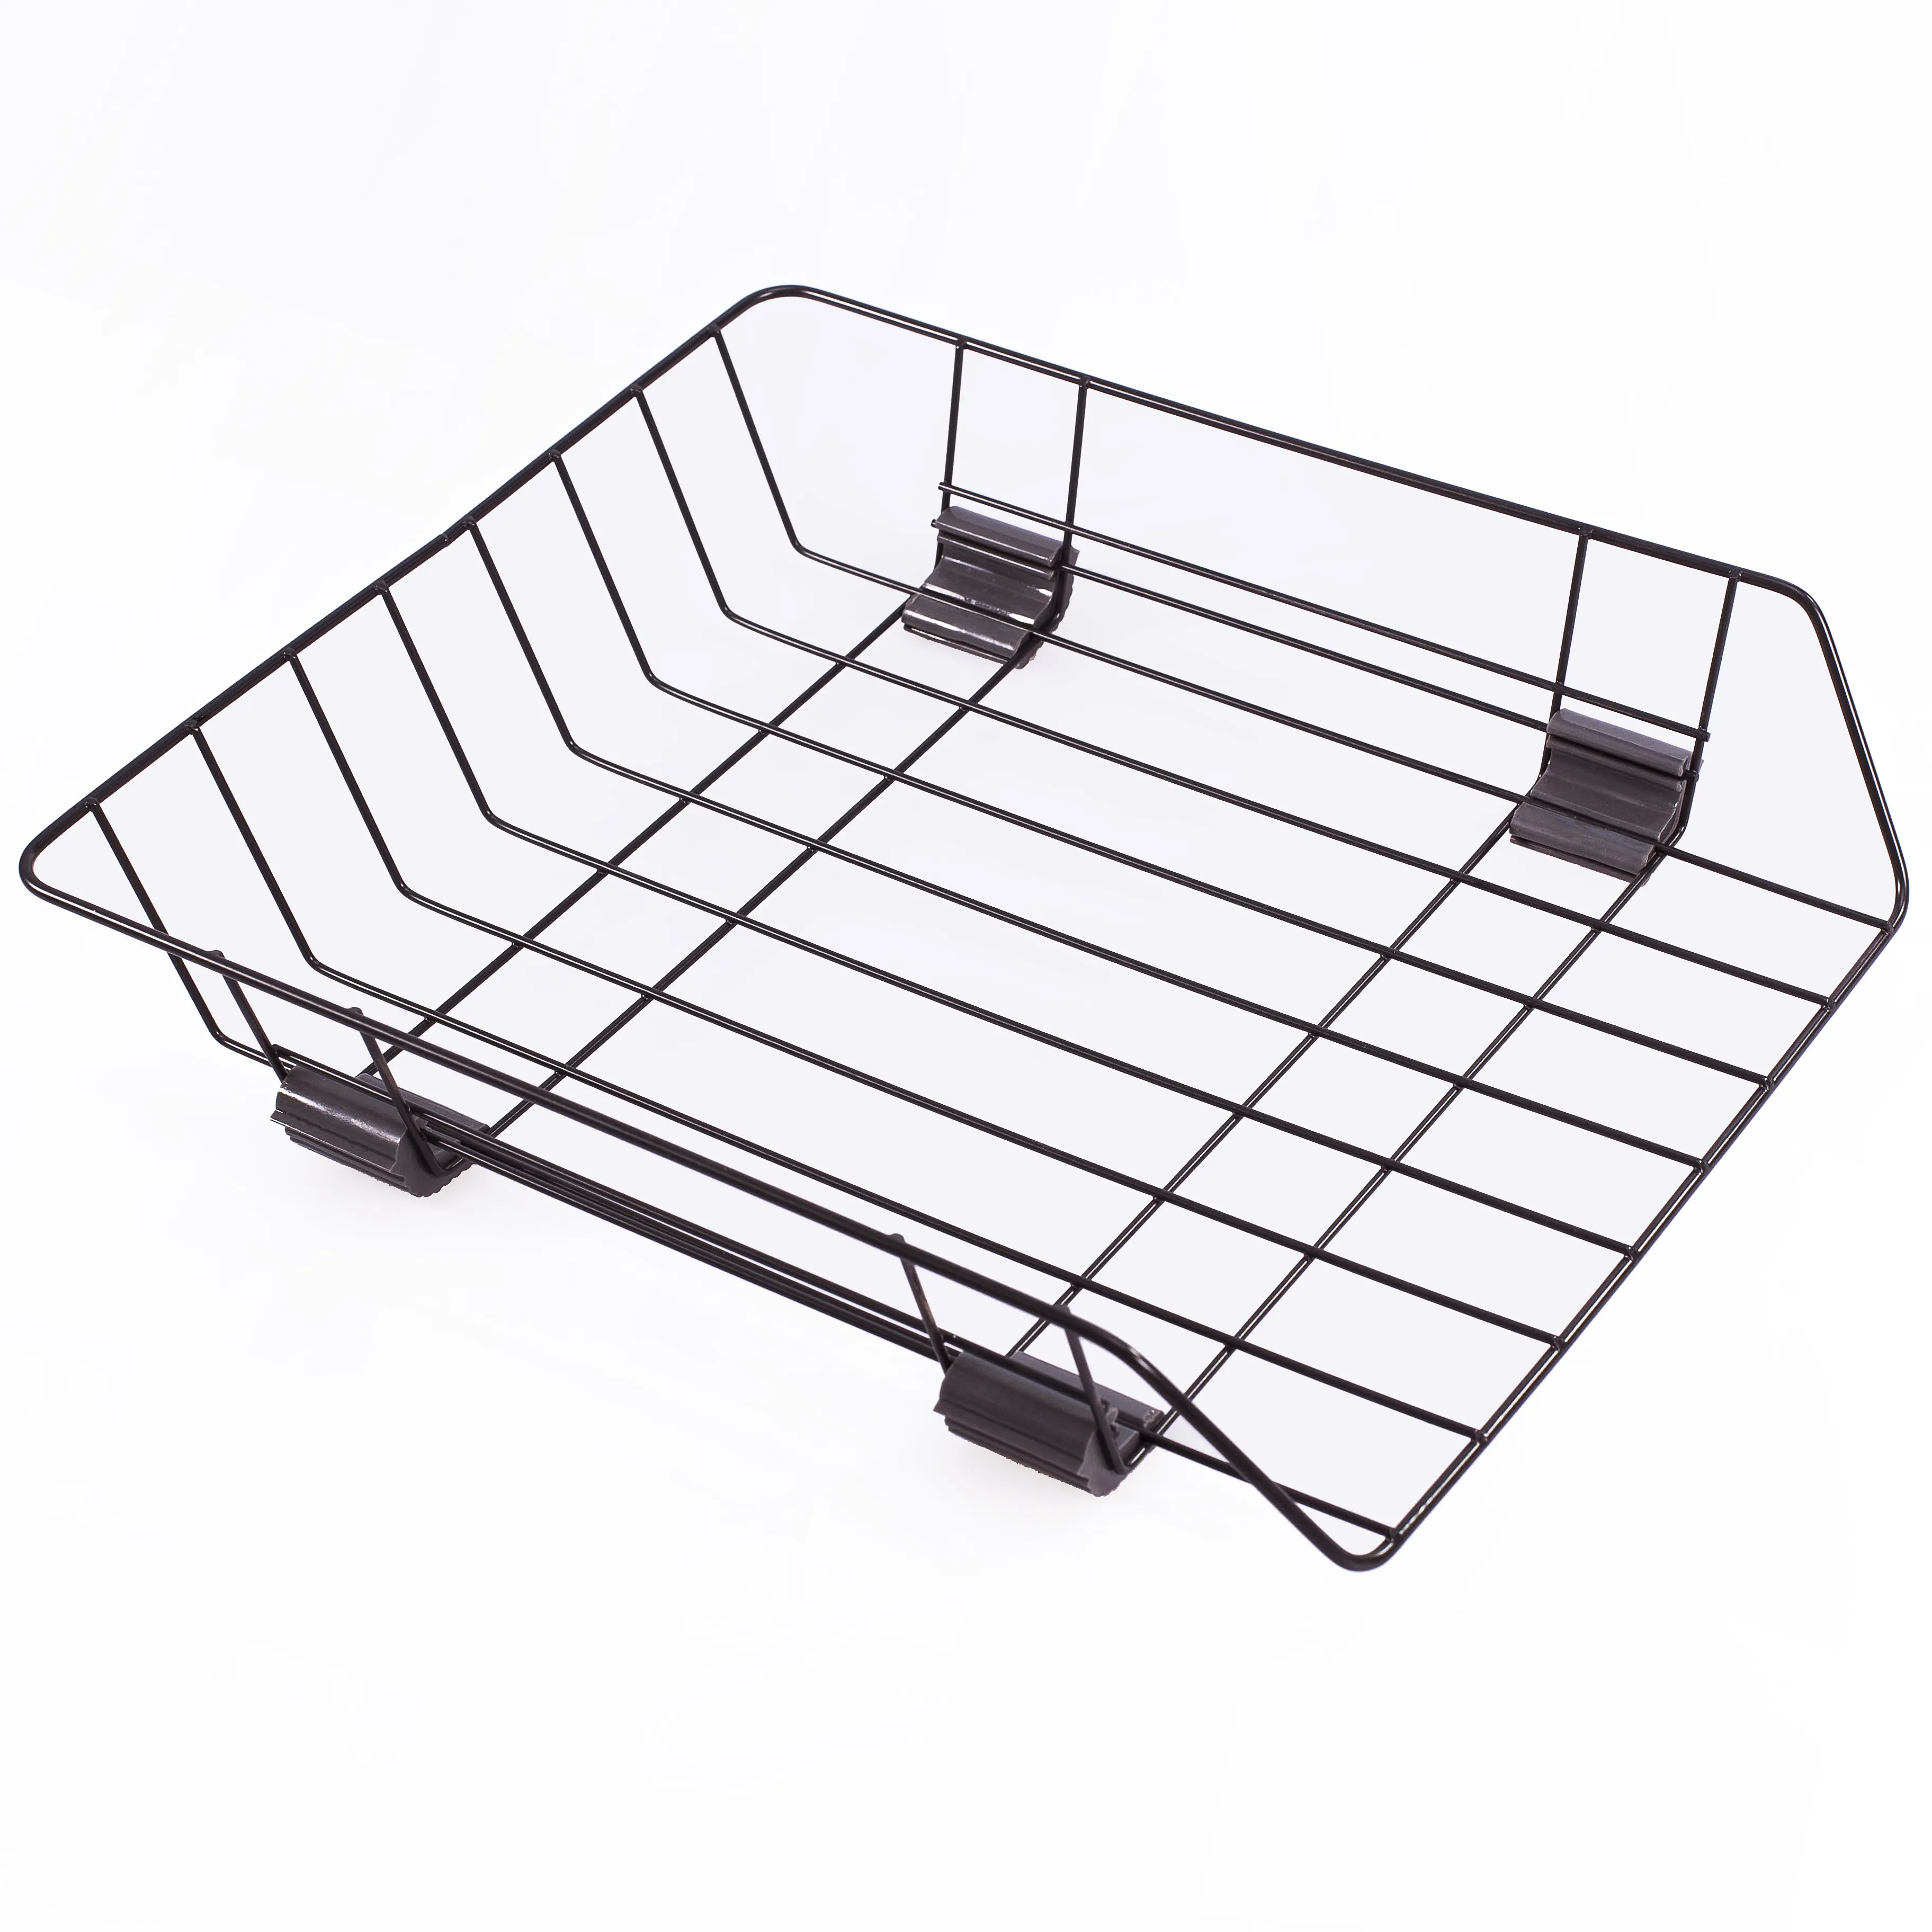 Classic iron steel wire storage rack/ metal wire refrigerator bin basket and freezer basket/ wire basket cabinet drawer